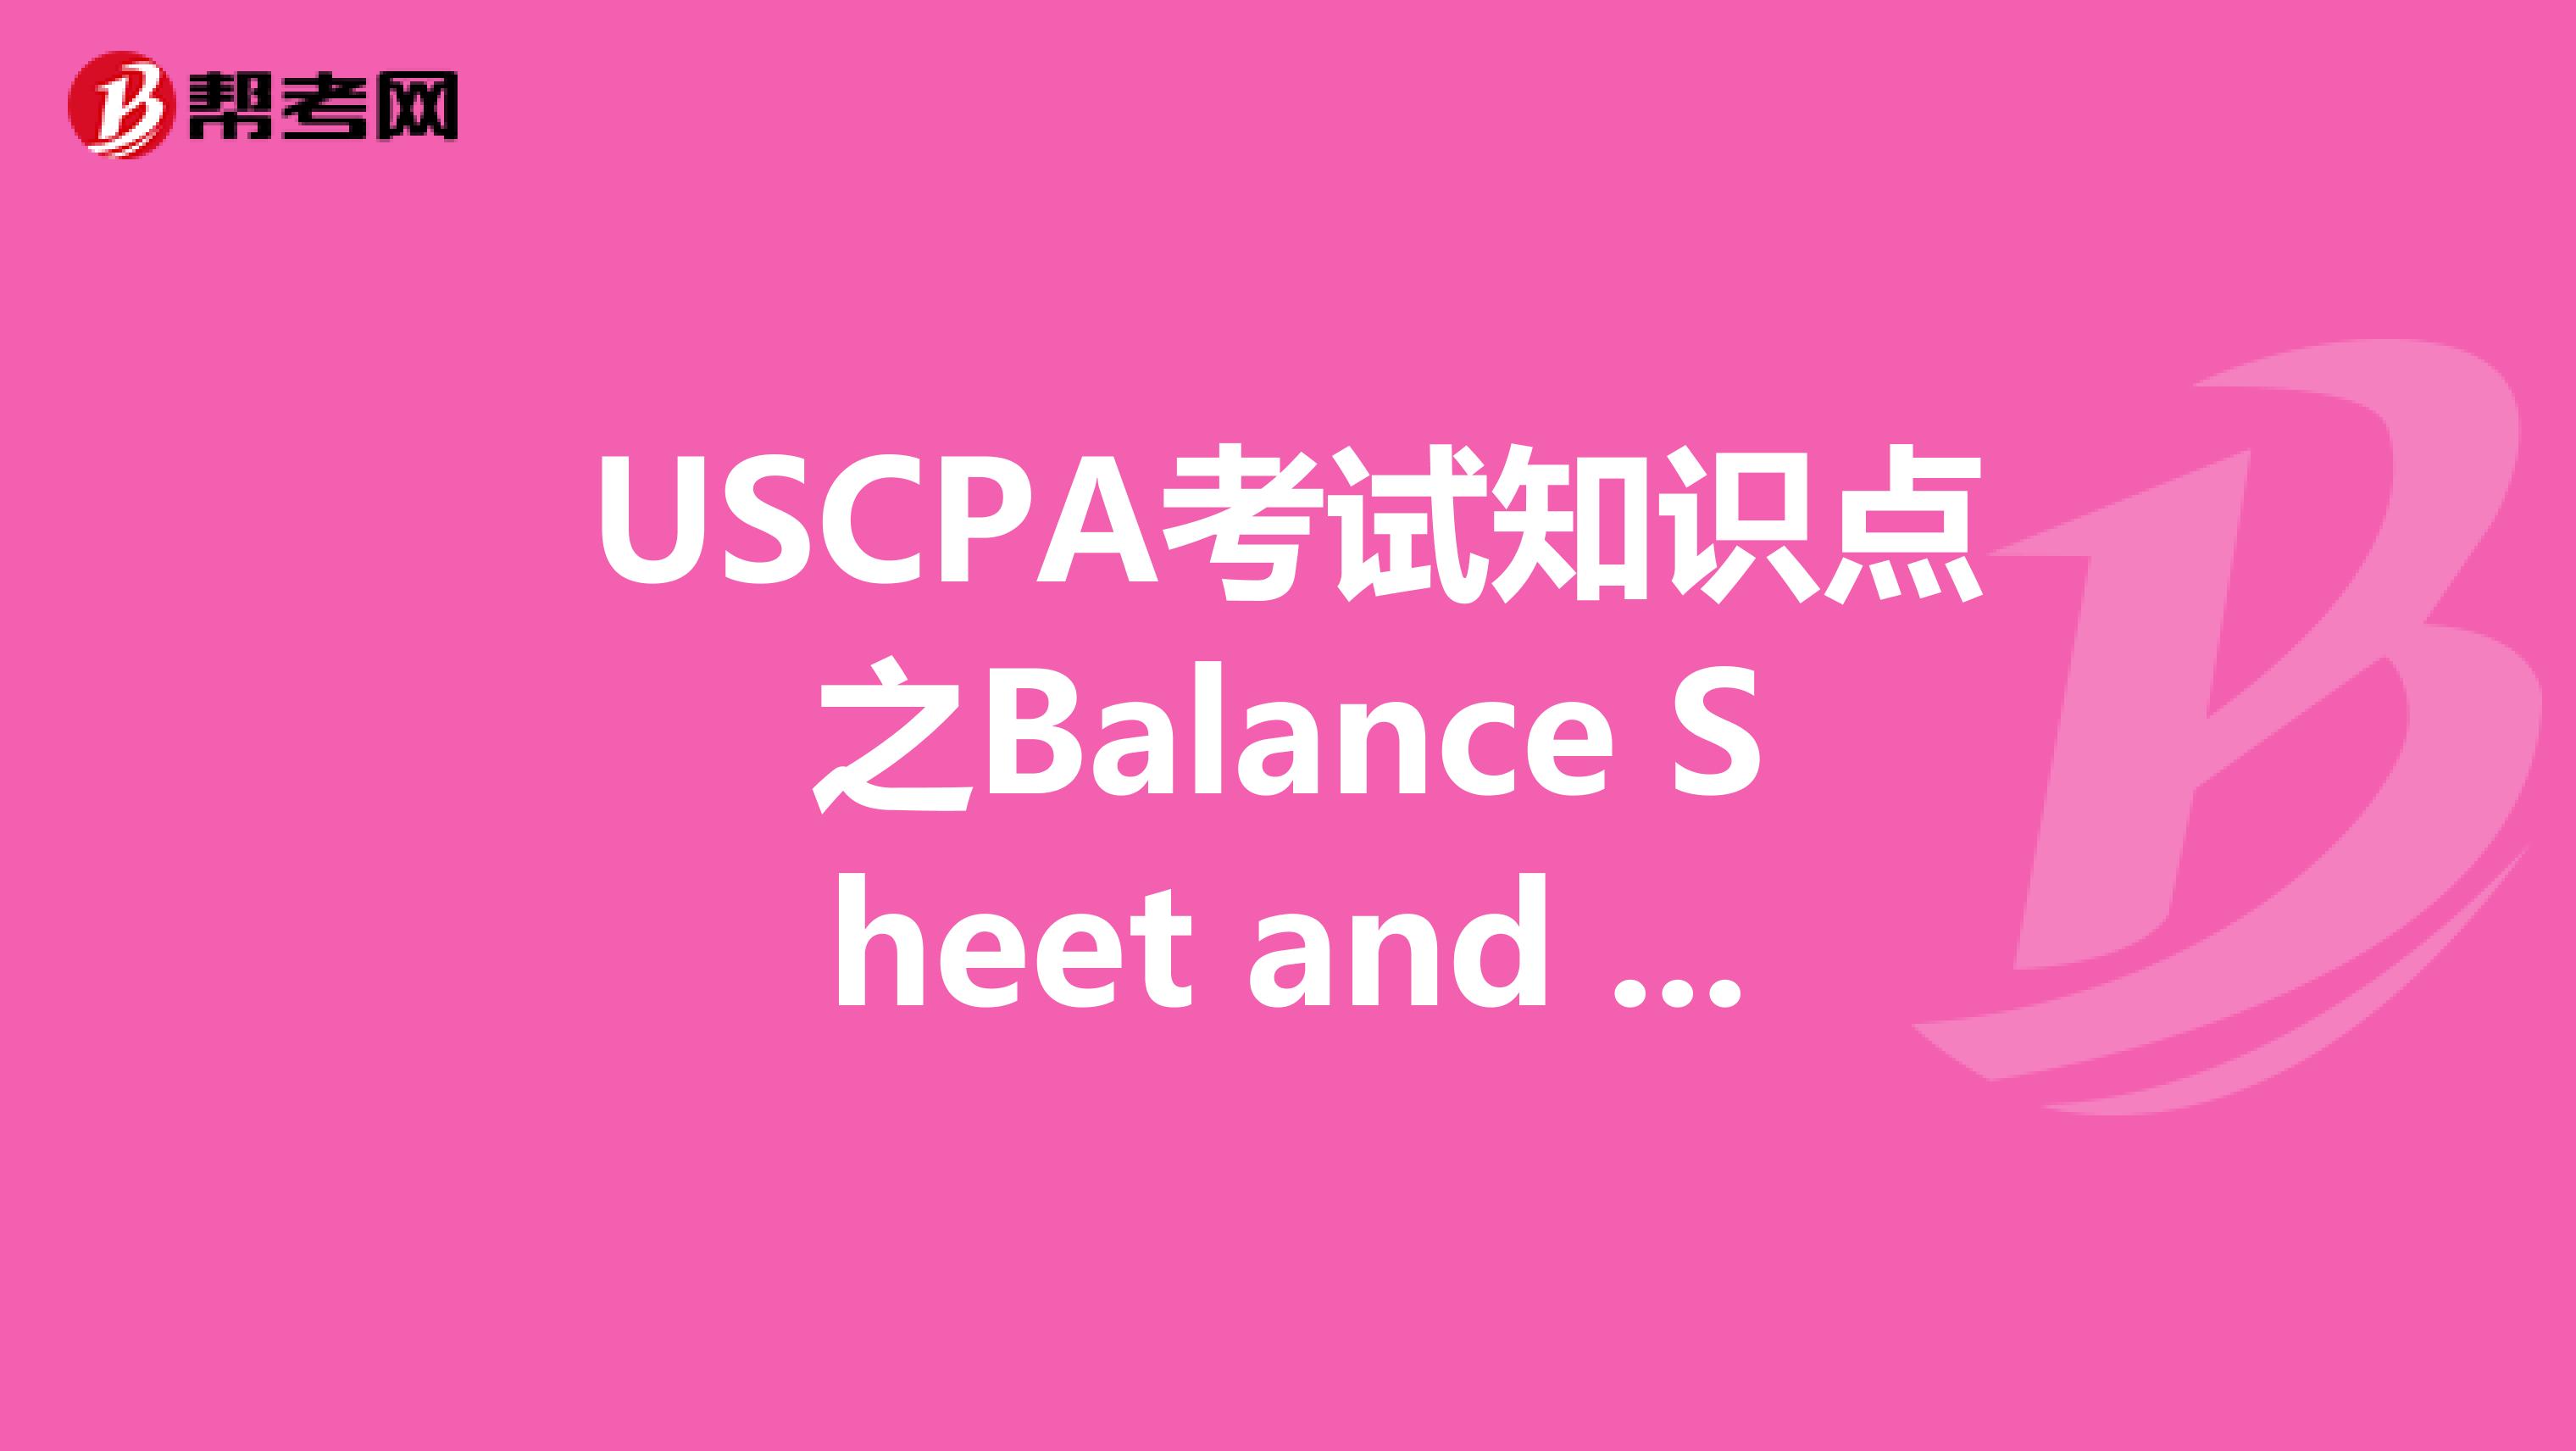 USCPA考试知识点之Balance Sheet and Disclosures